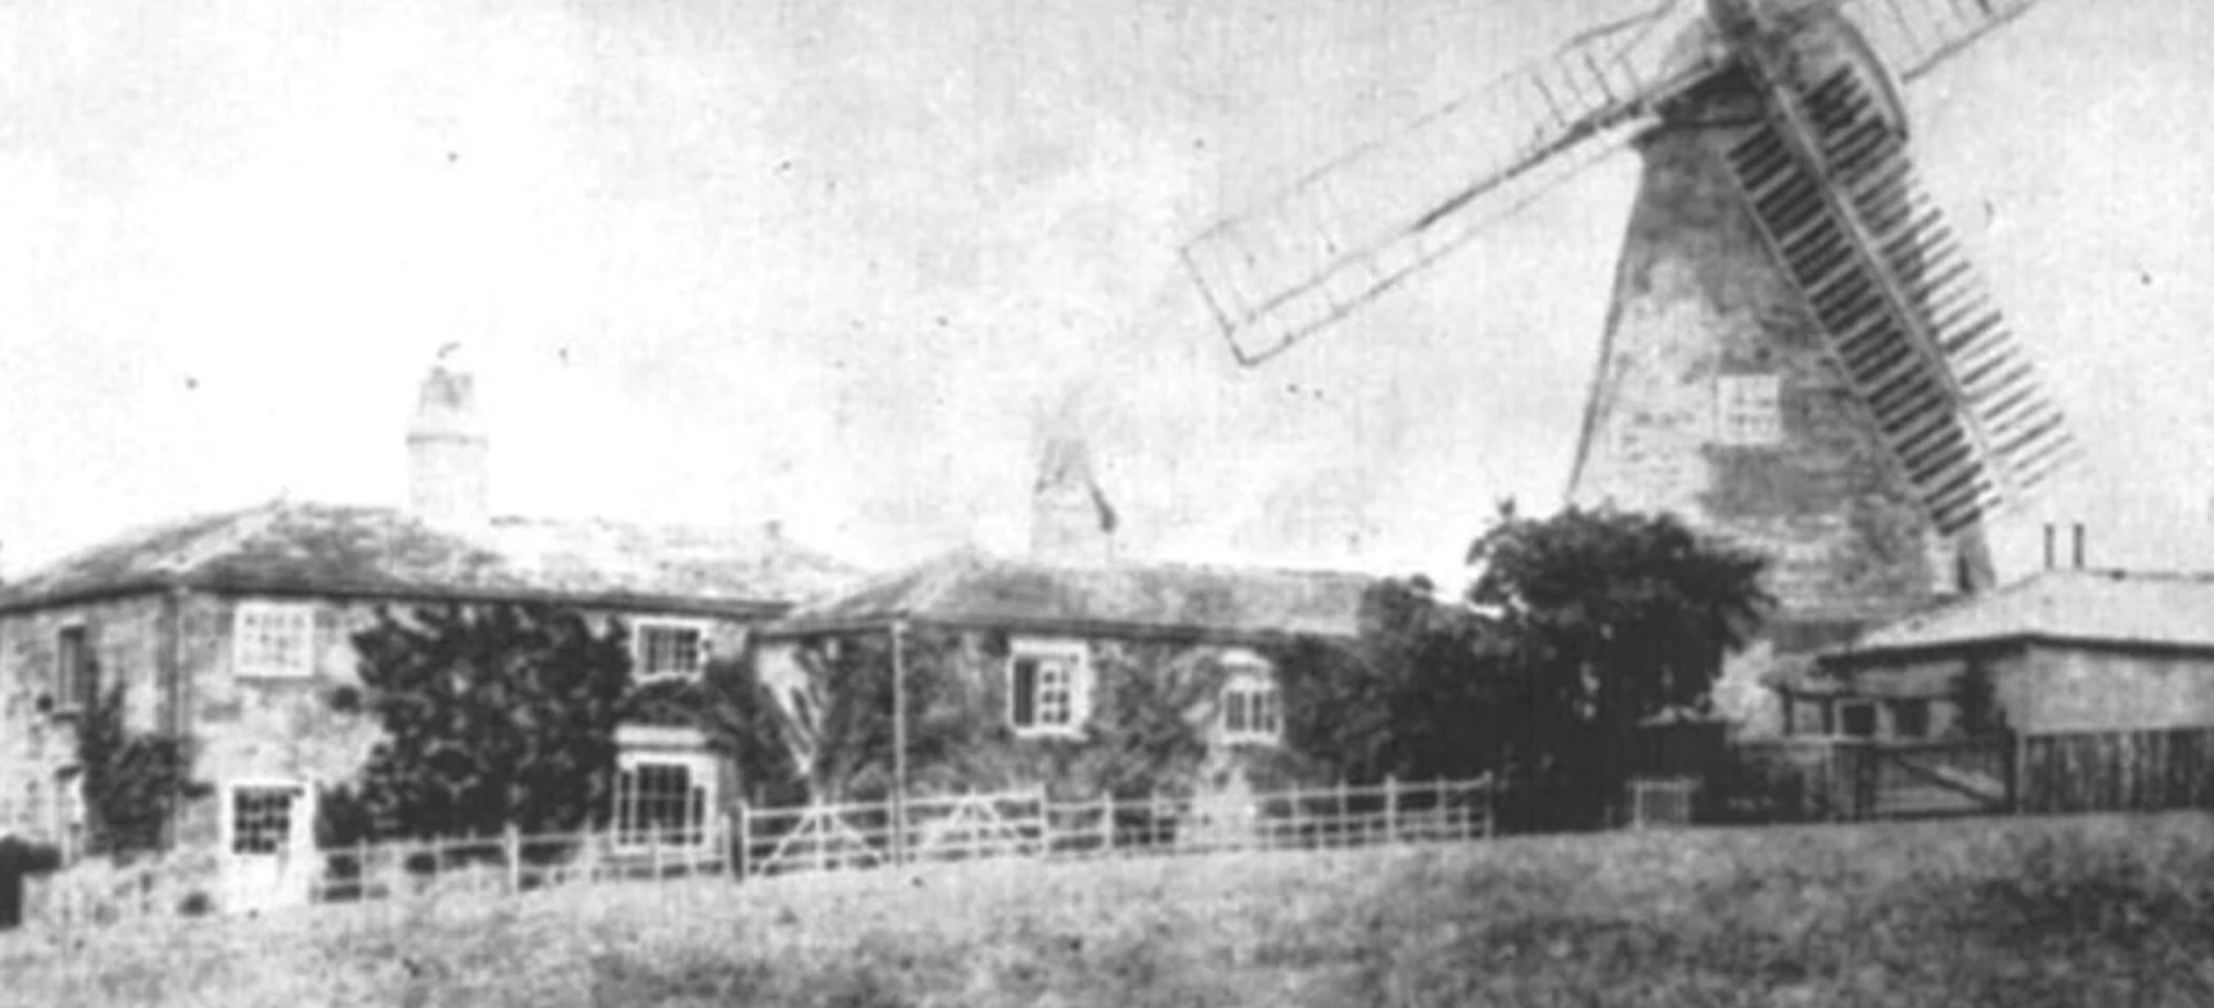 The original Nelstrops family mill in Ackworth, Yorkshire